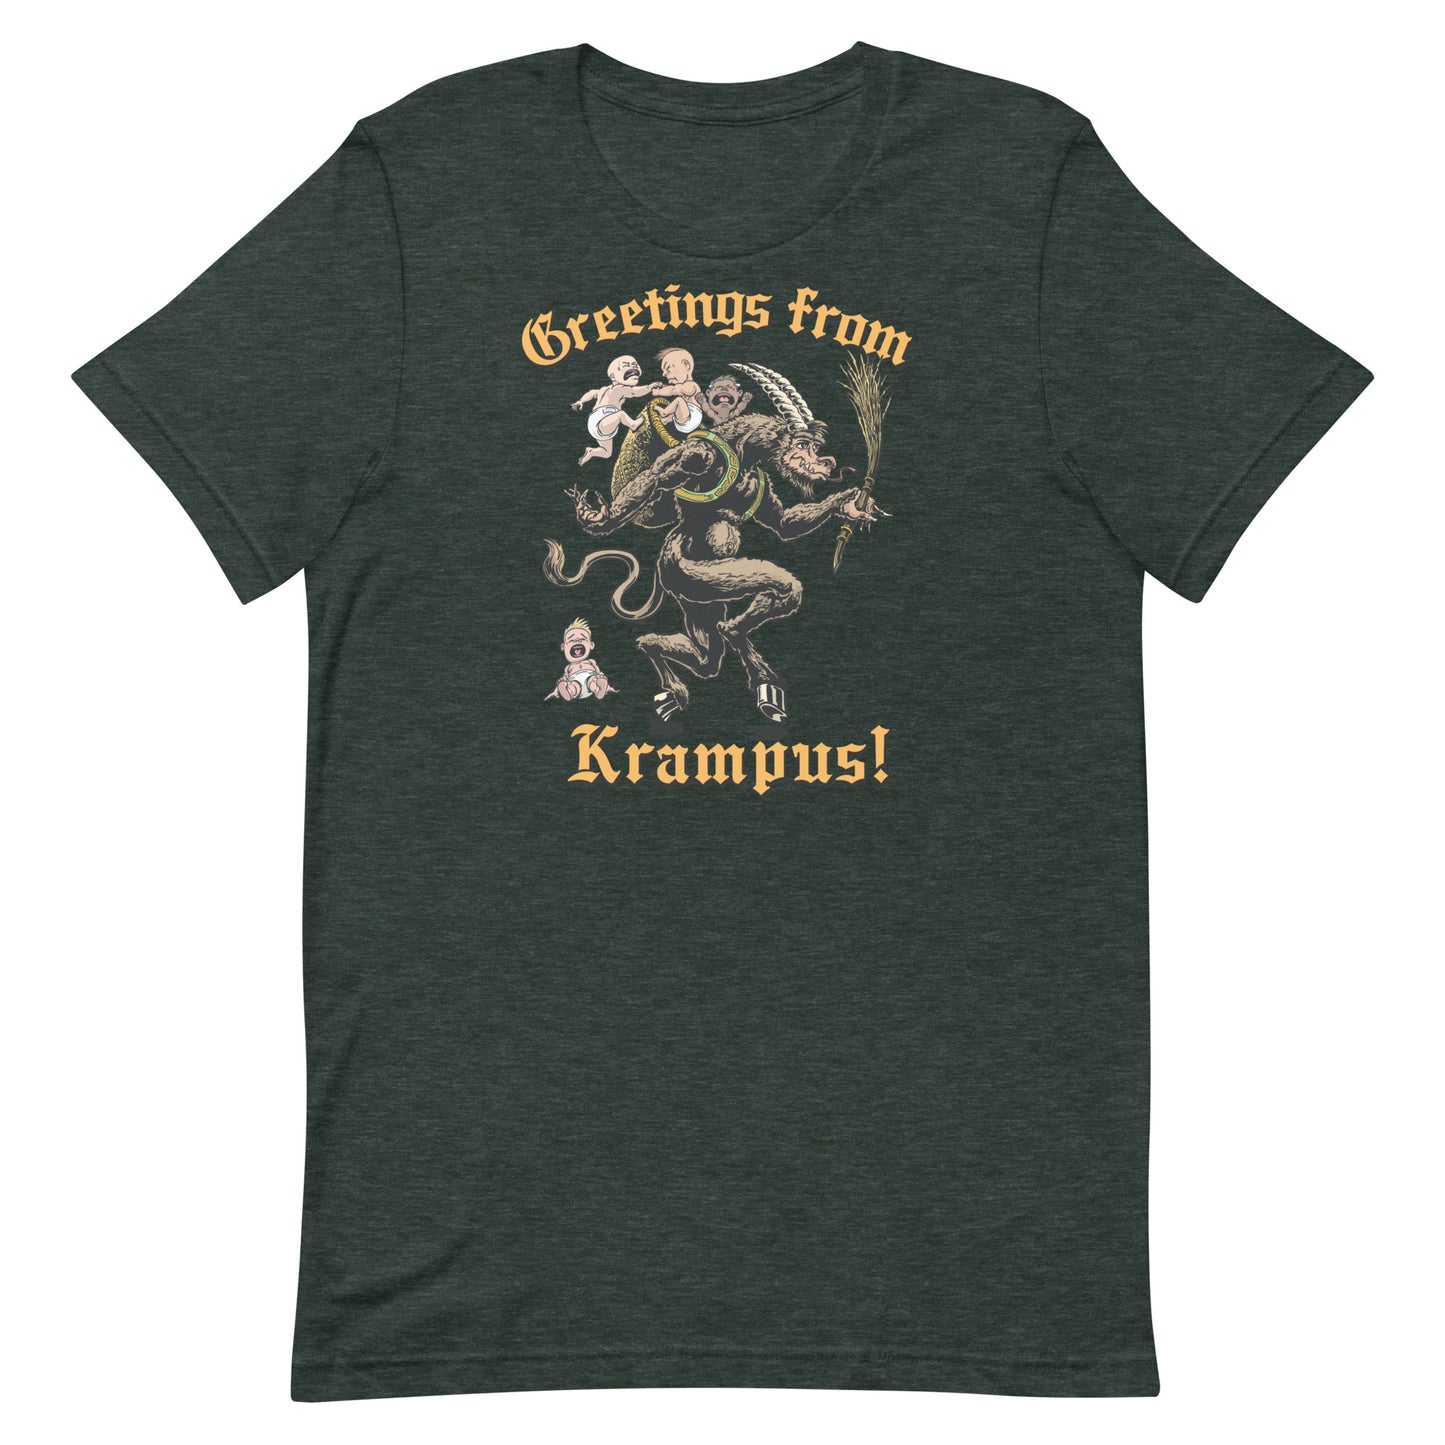 Greetings from Krampus T-Shirt